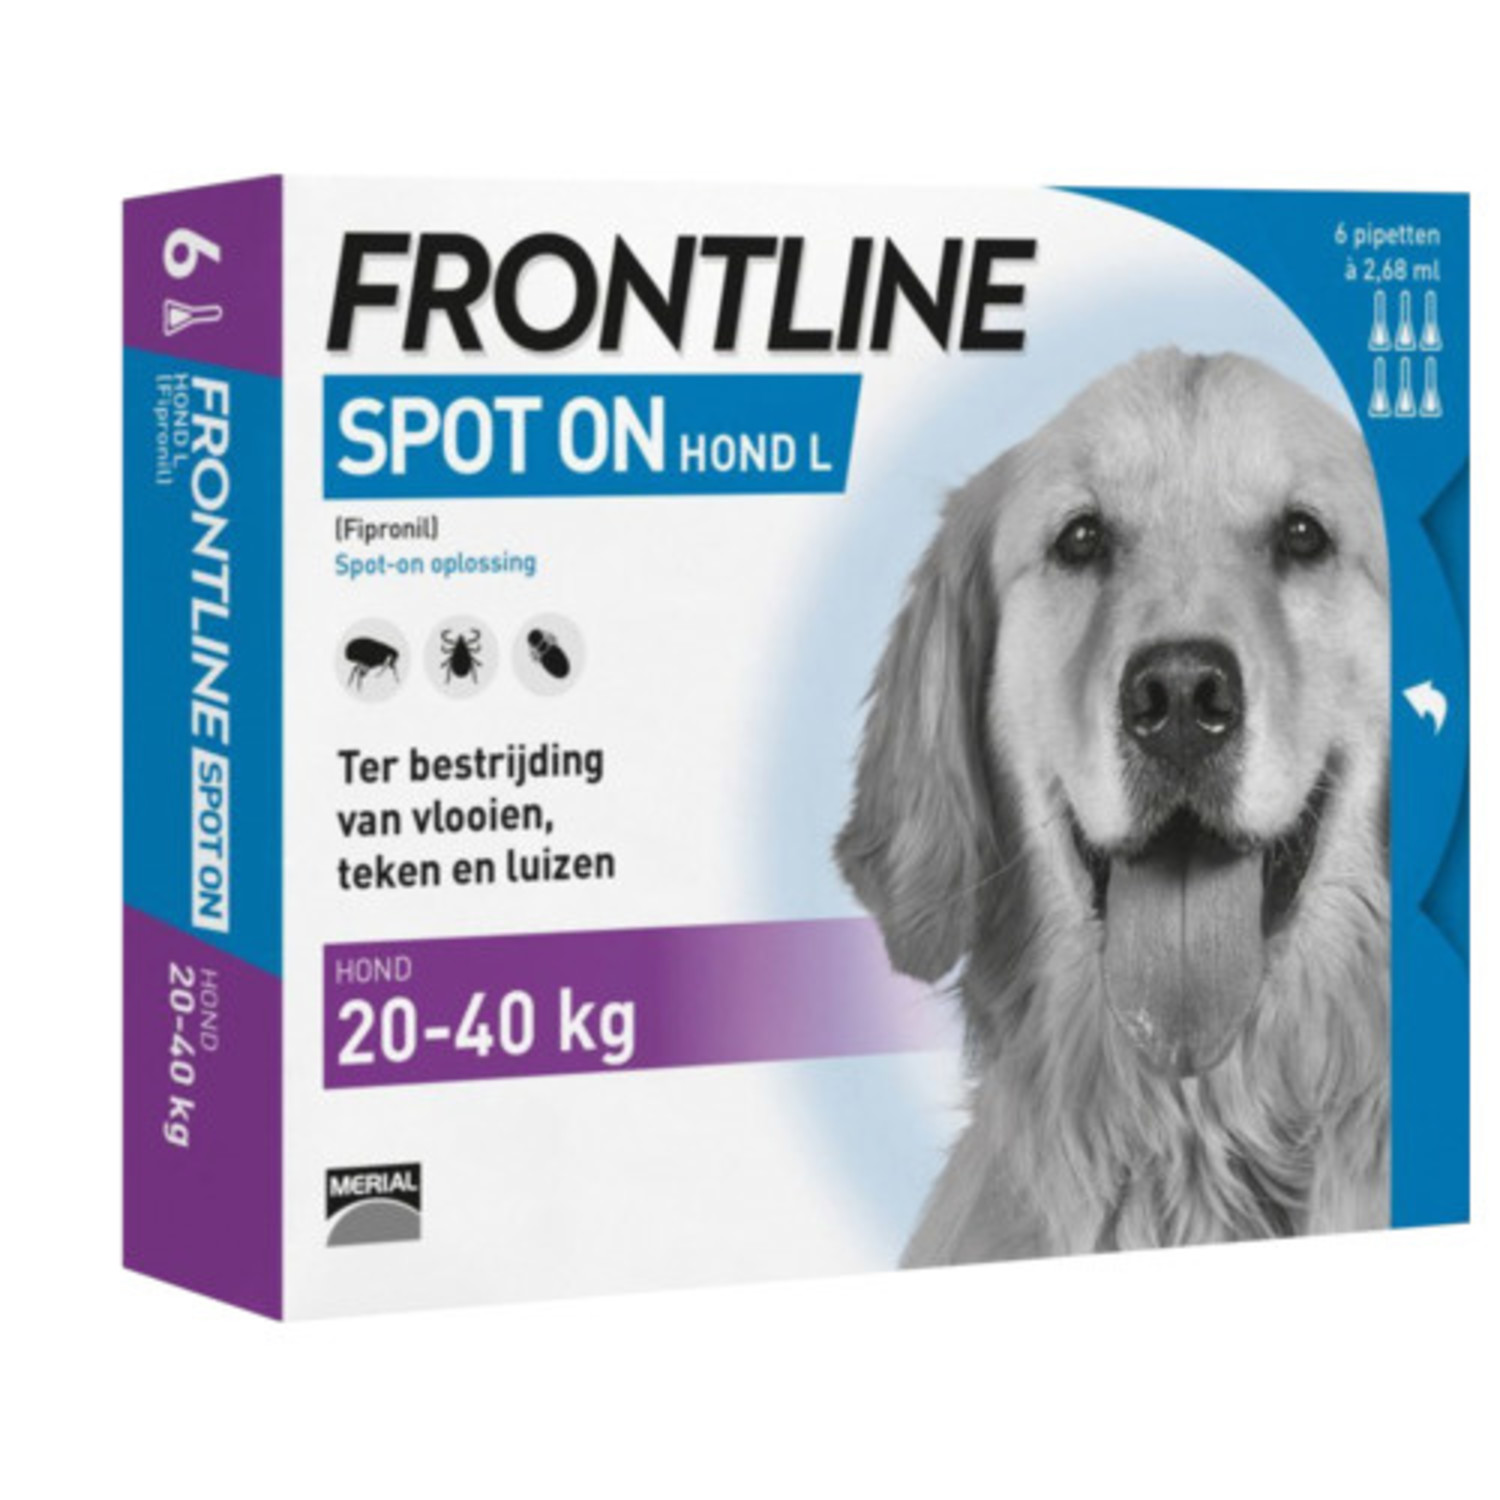 Opa Konijn vereist Frontline Spot On Hond L (20 tot 40 kg) 6 pipetten - Agridiscounter